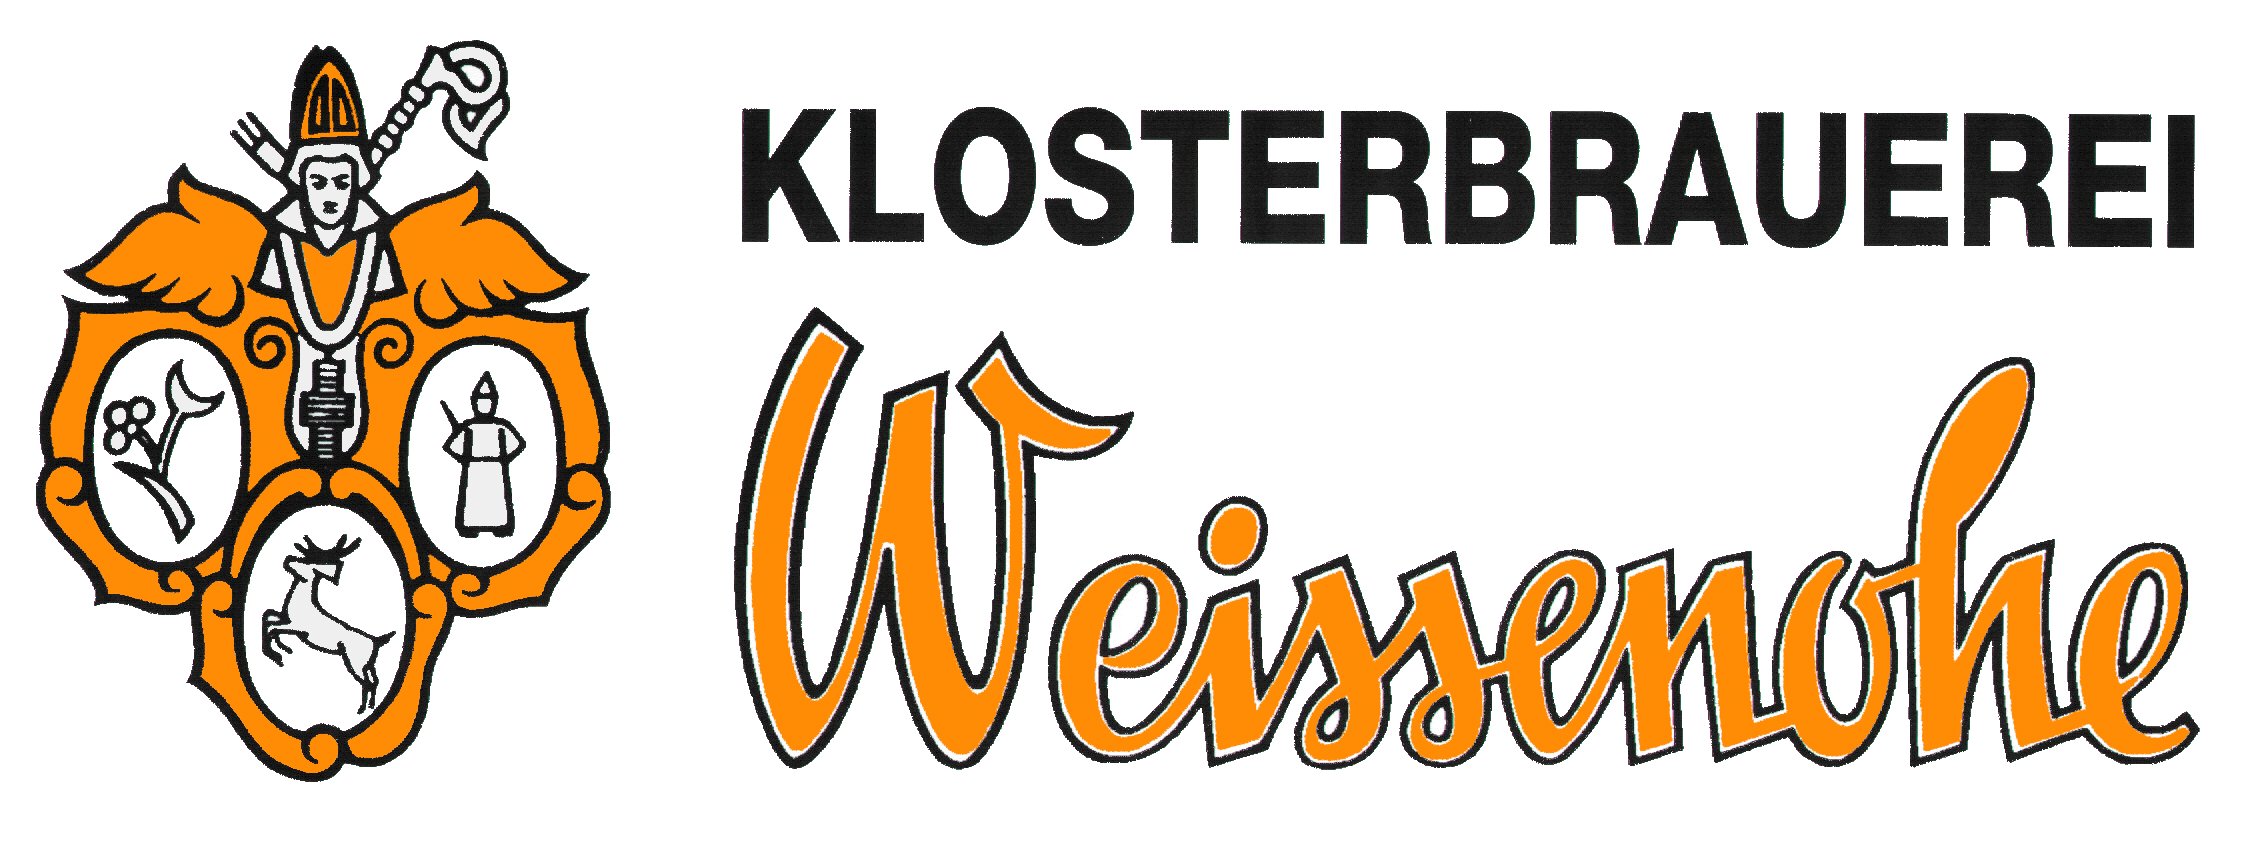  http://www.sheltonbrothers.com/breweries/klosterbrauerei-weissenohe/ 